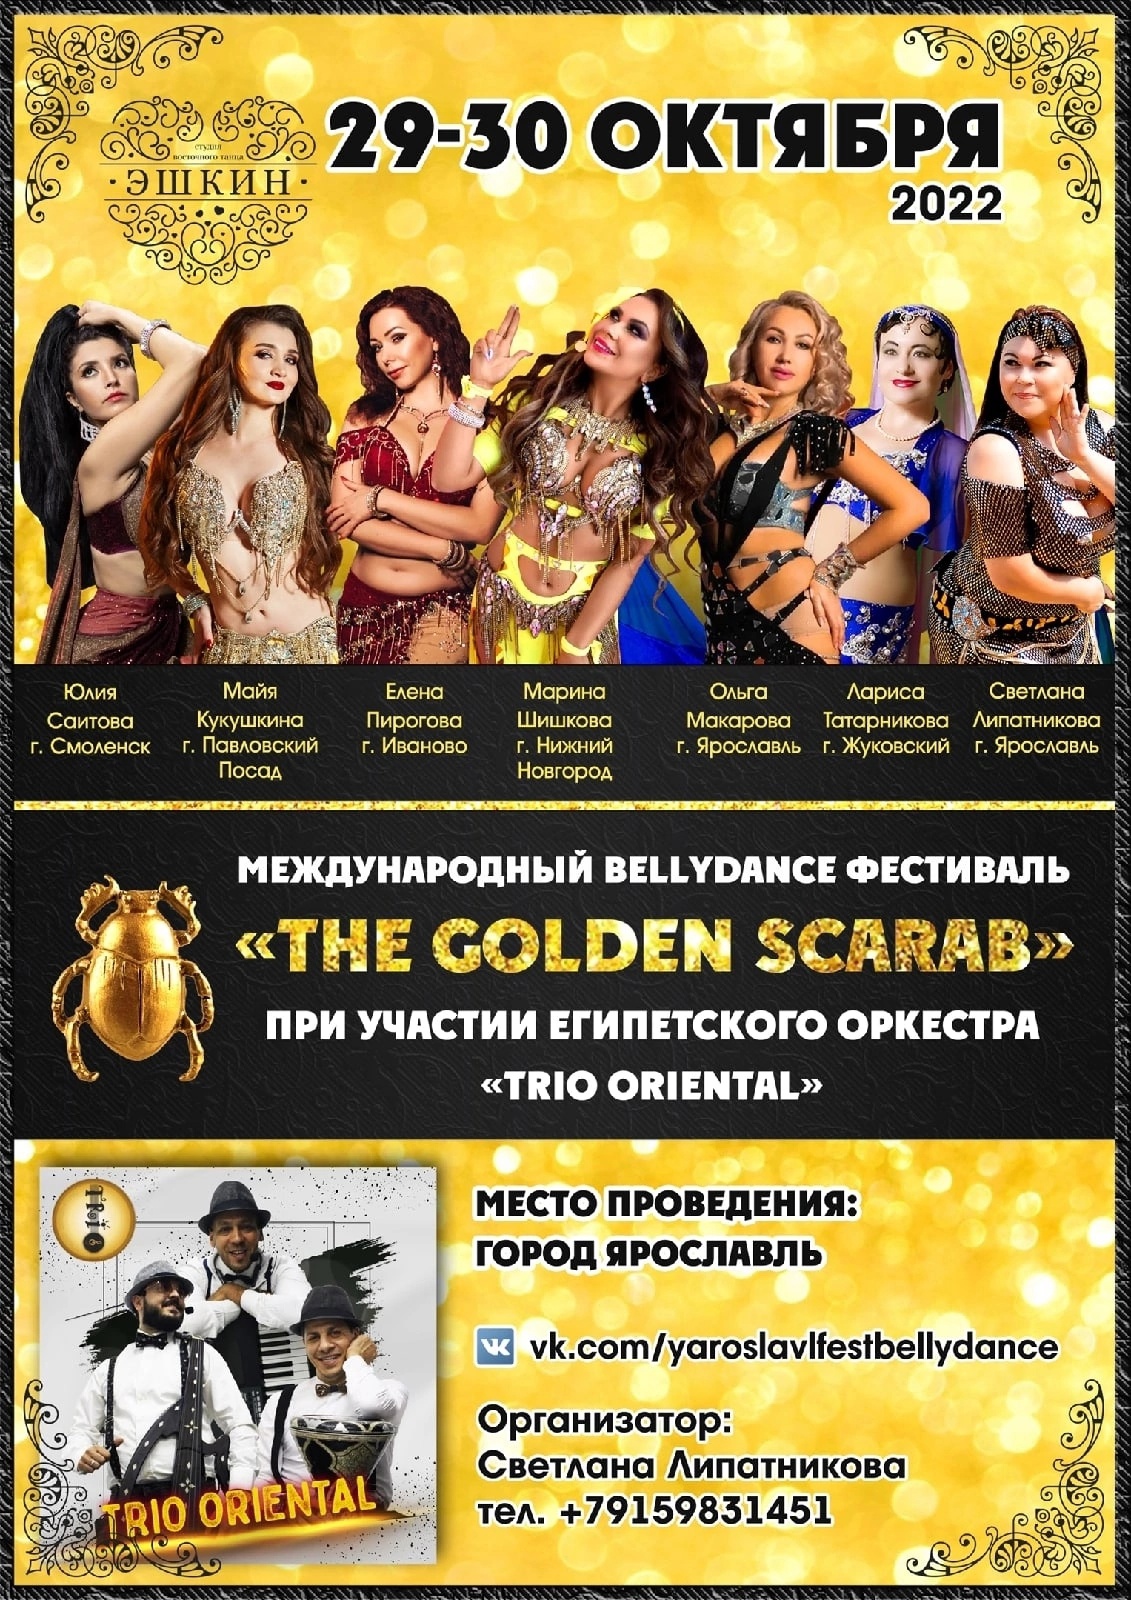 Bellydance фестиваль The golden scarab